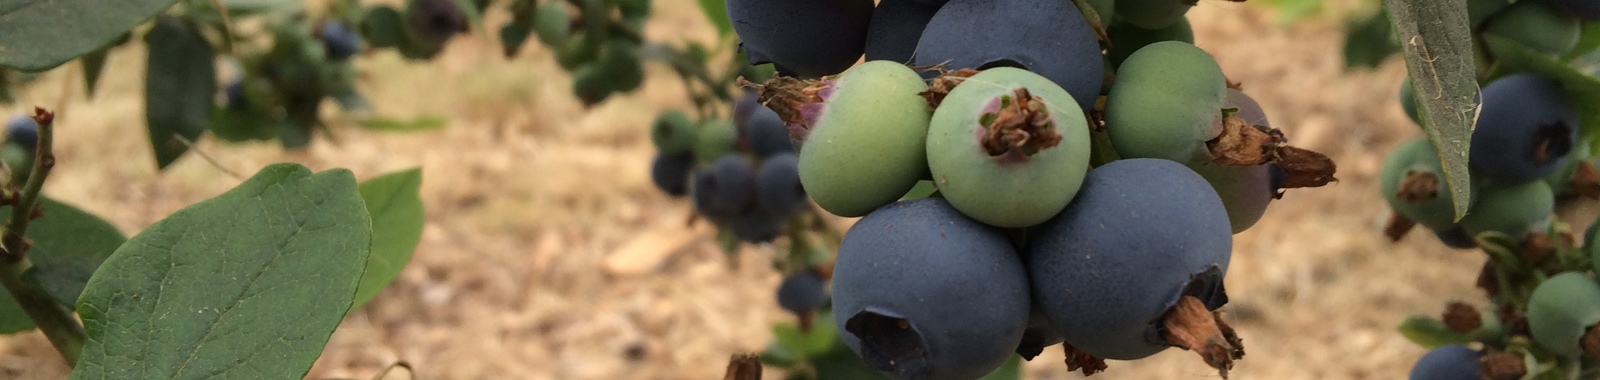 Blueberry fertigation and crop nutrition